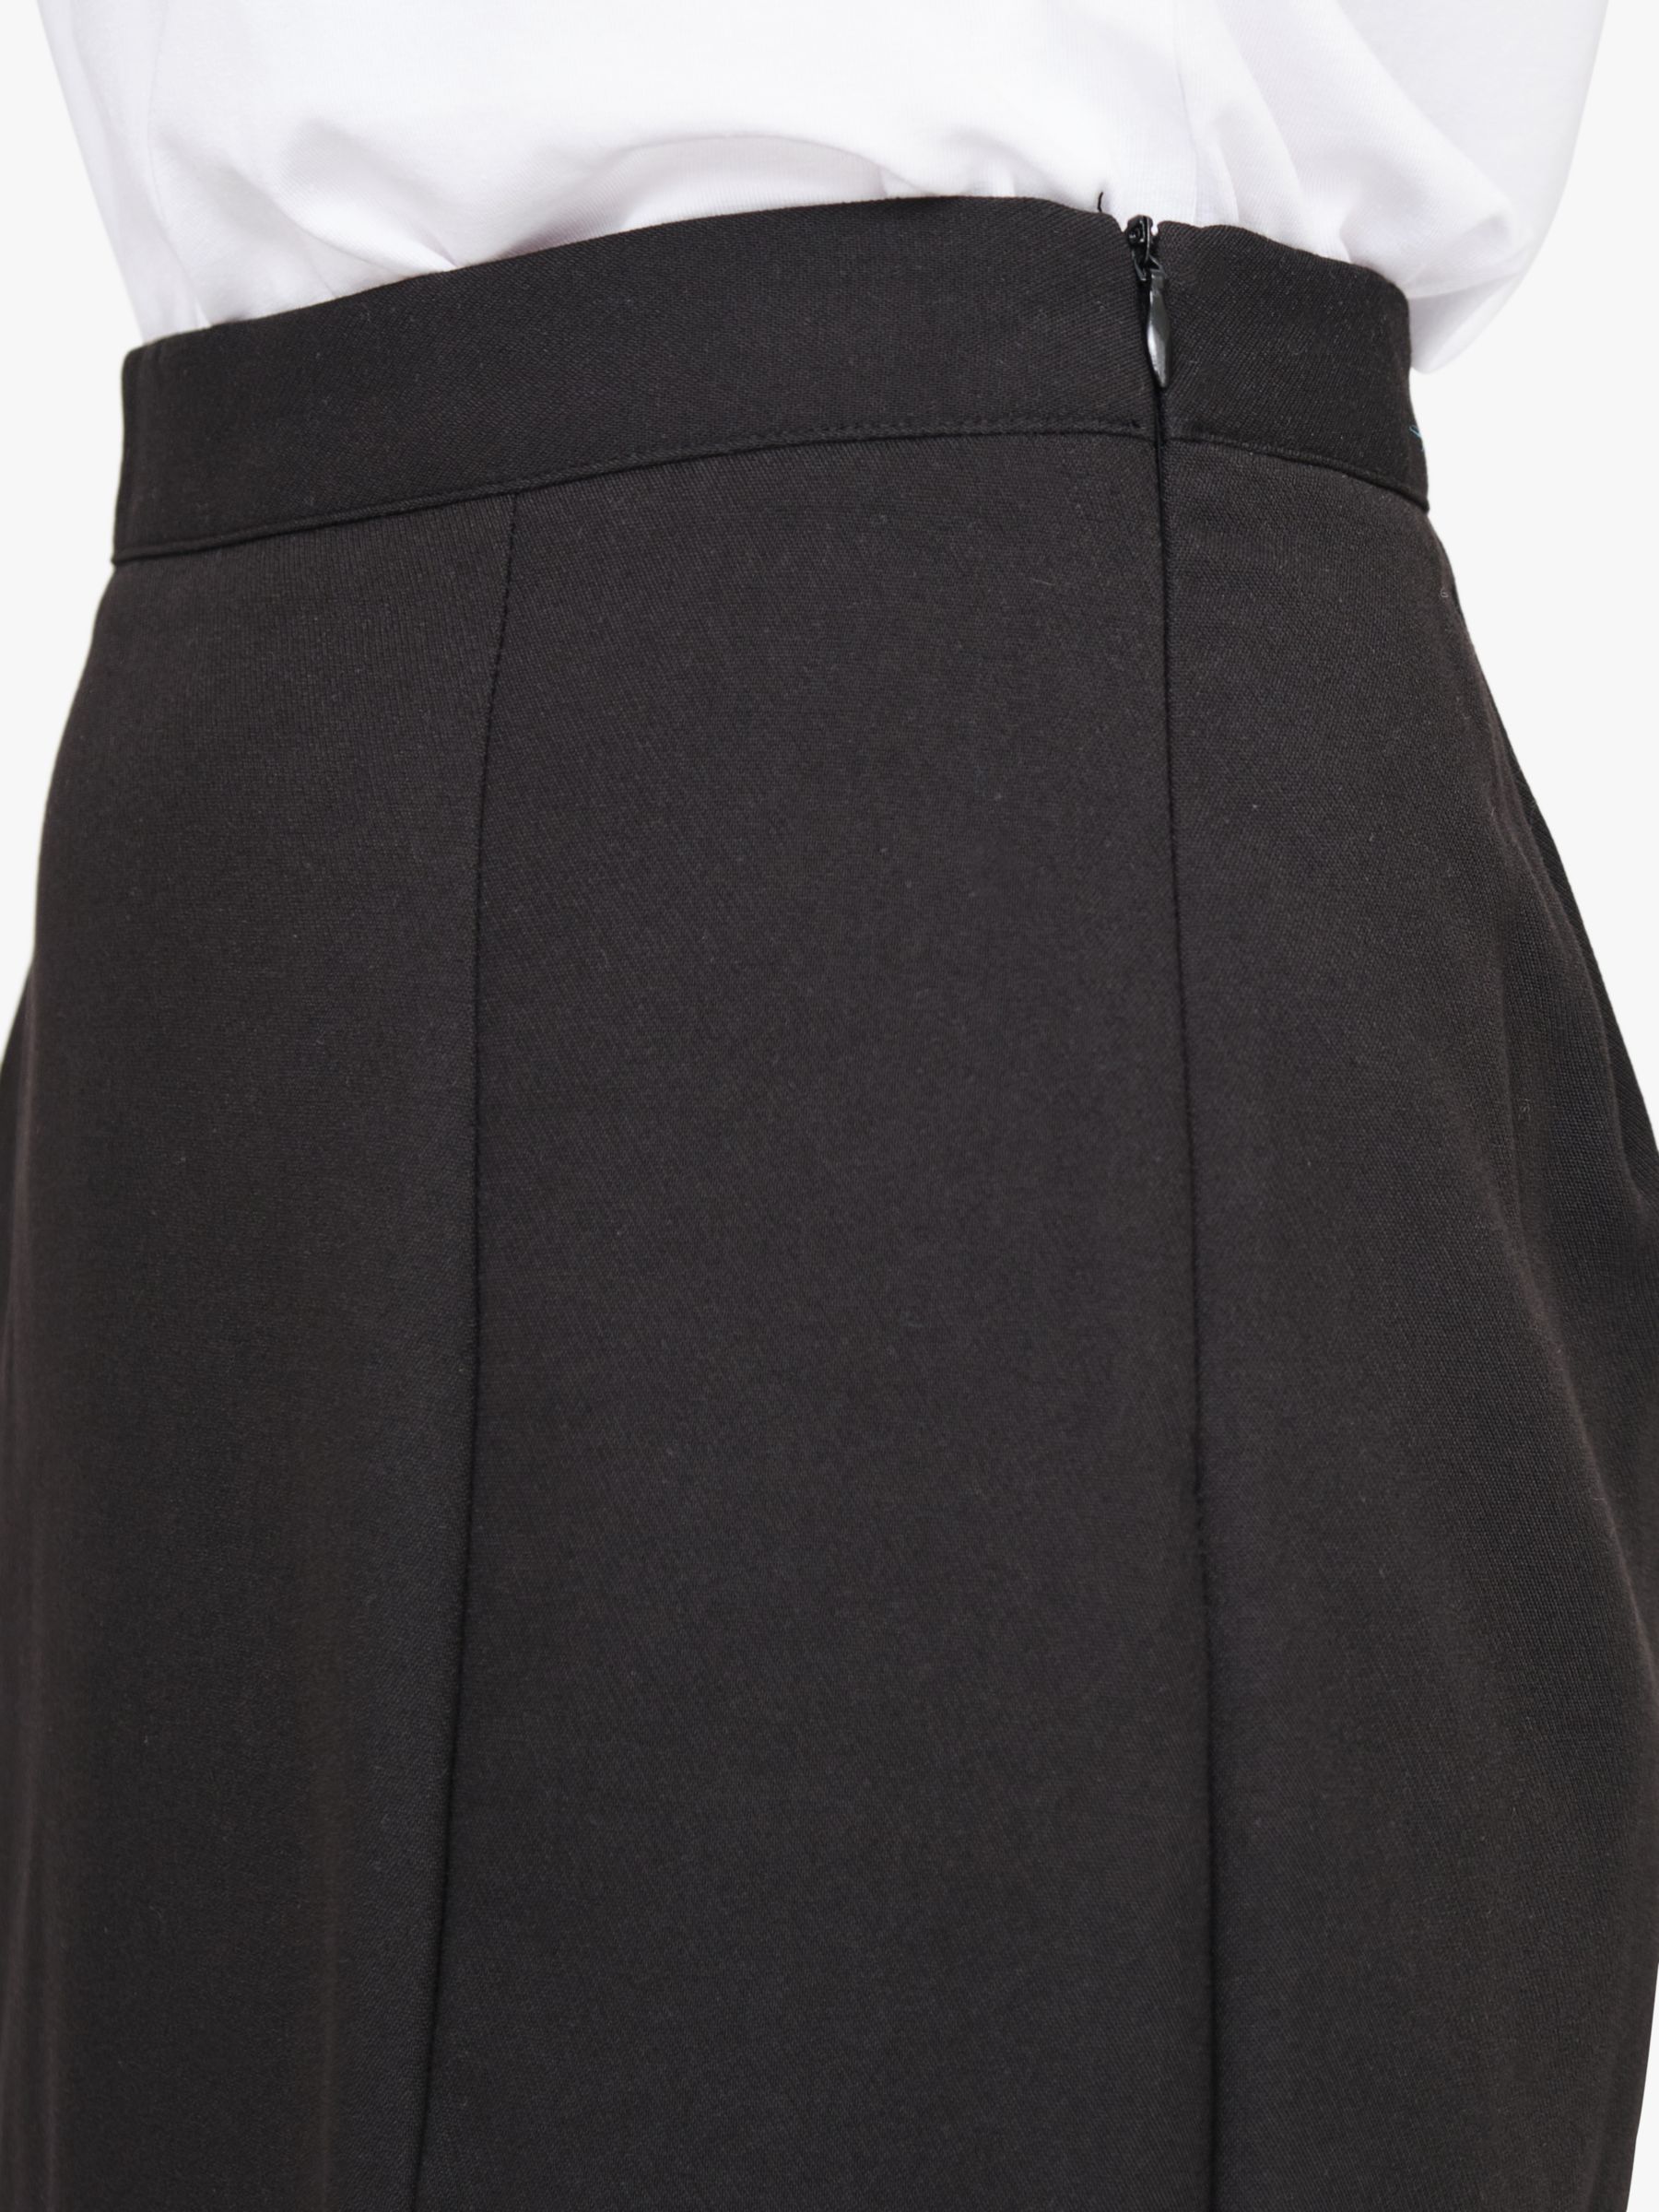 Buy A-VIEW Annali Side Slit Skirt Online at johnlewis.com